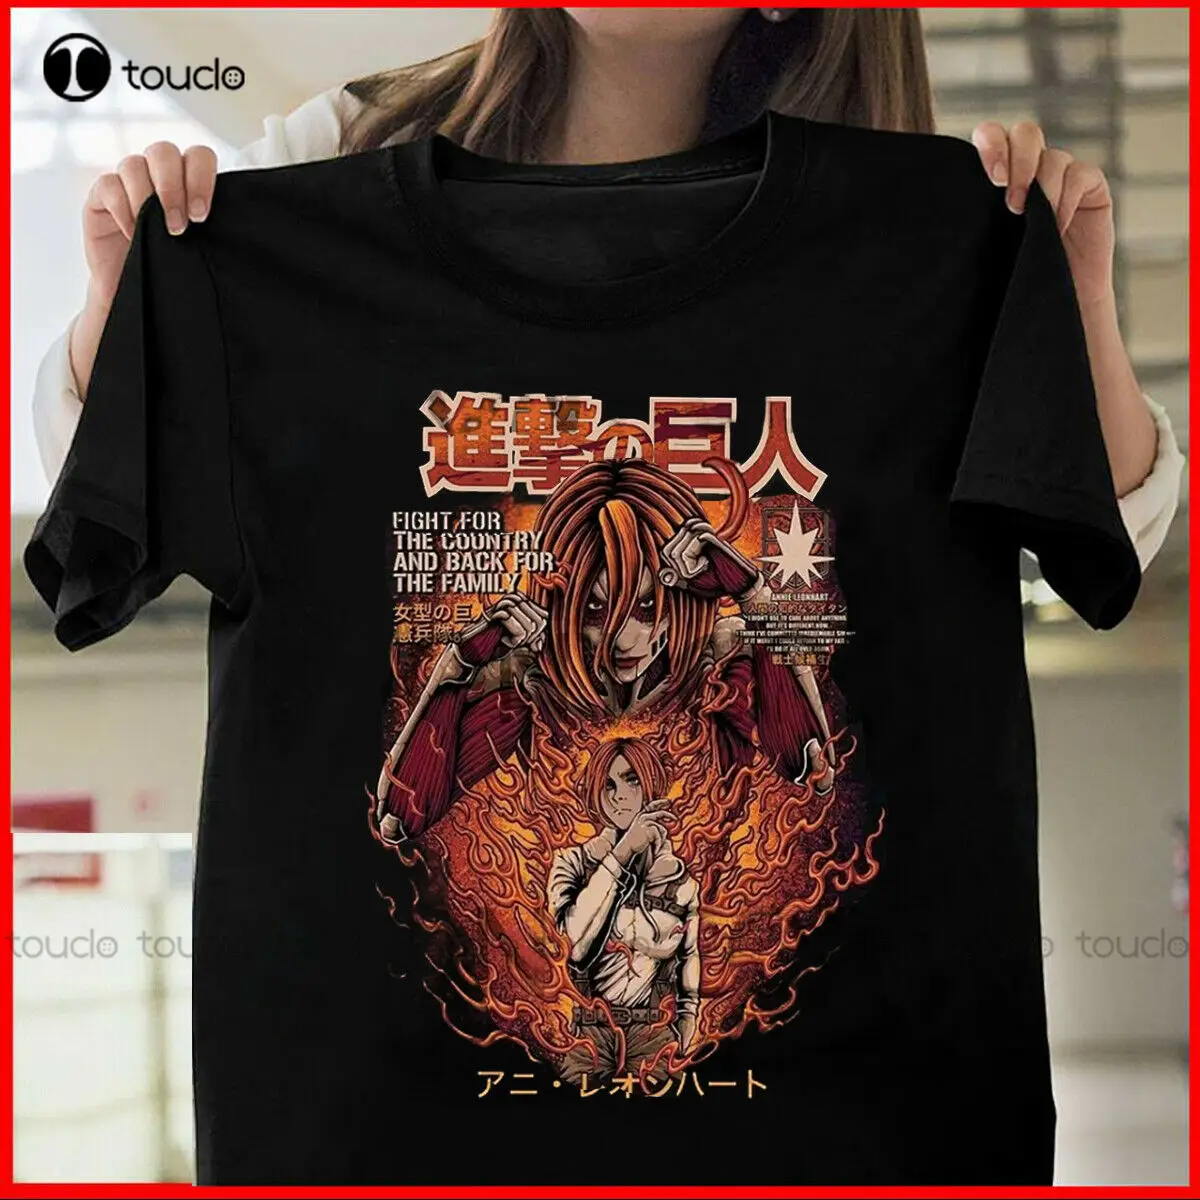 Aliexpress Hot! Vintage Aot Annie Leonhart Female Titan Anime T Shirt Size S_5Xl School Shirts for Girls XS-5XL